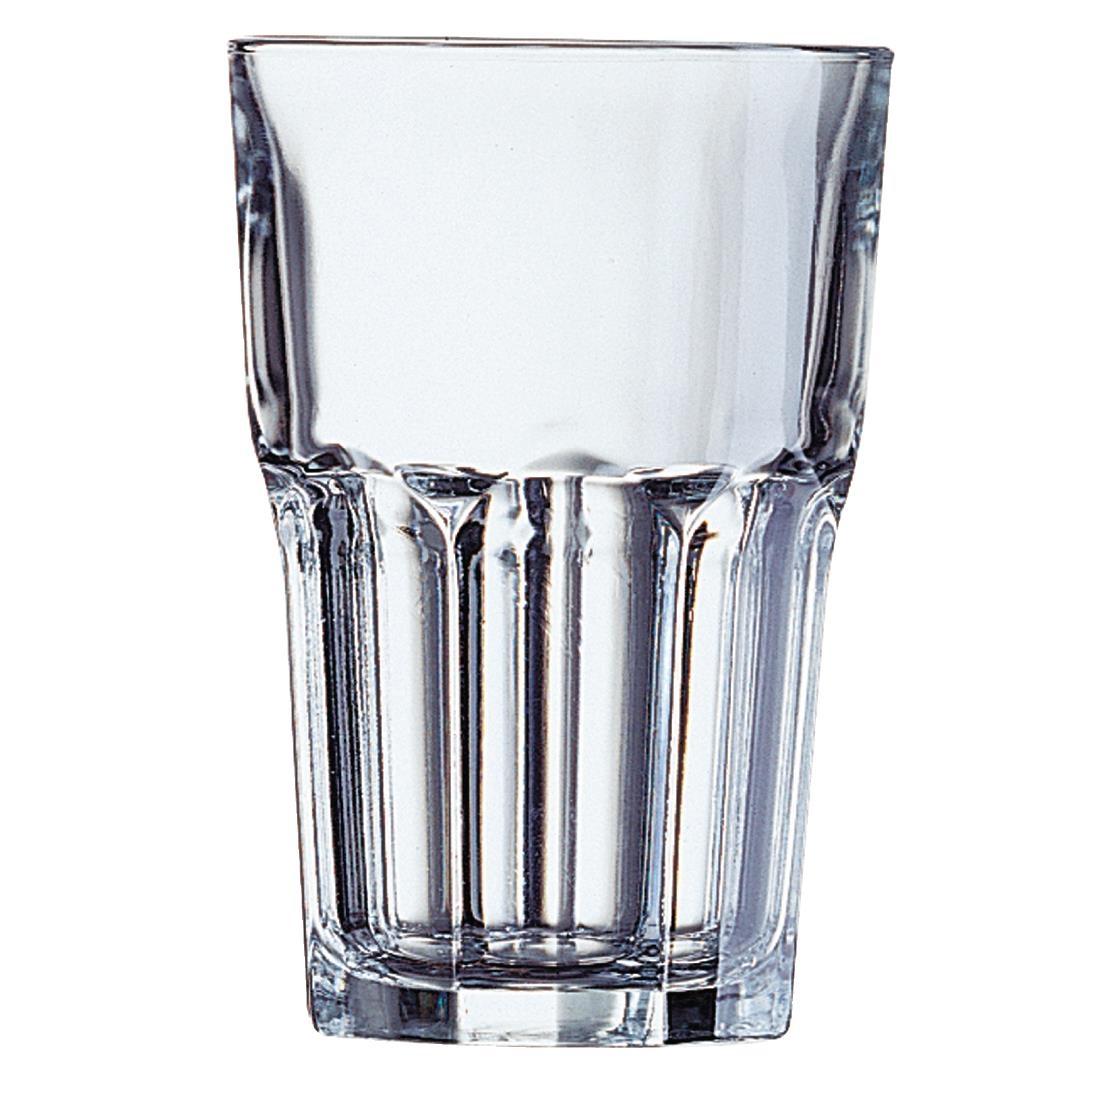 Arcoroc Granity Hi Ball Glasses 290ml CE Marked (Pack of 48) - CJ299  - 1